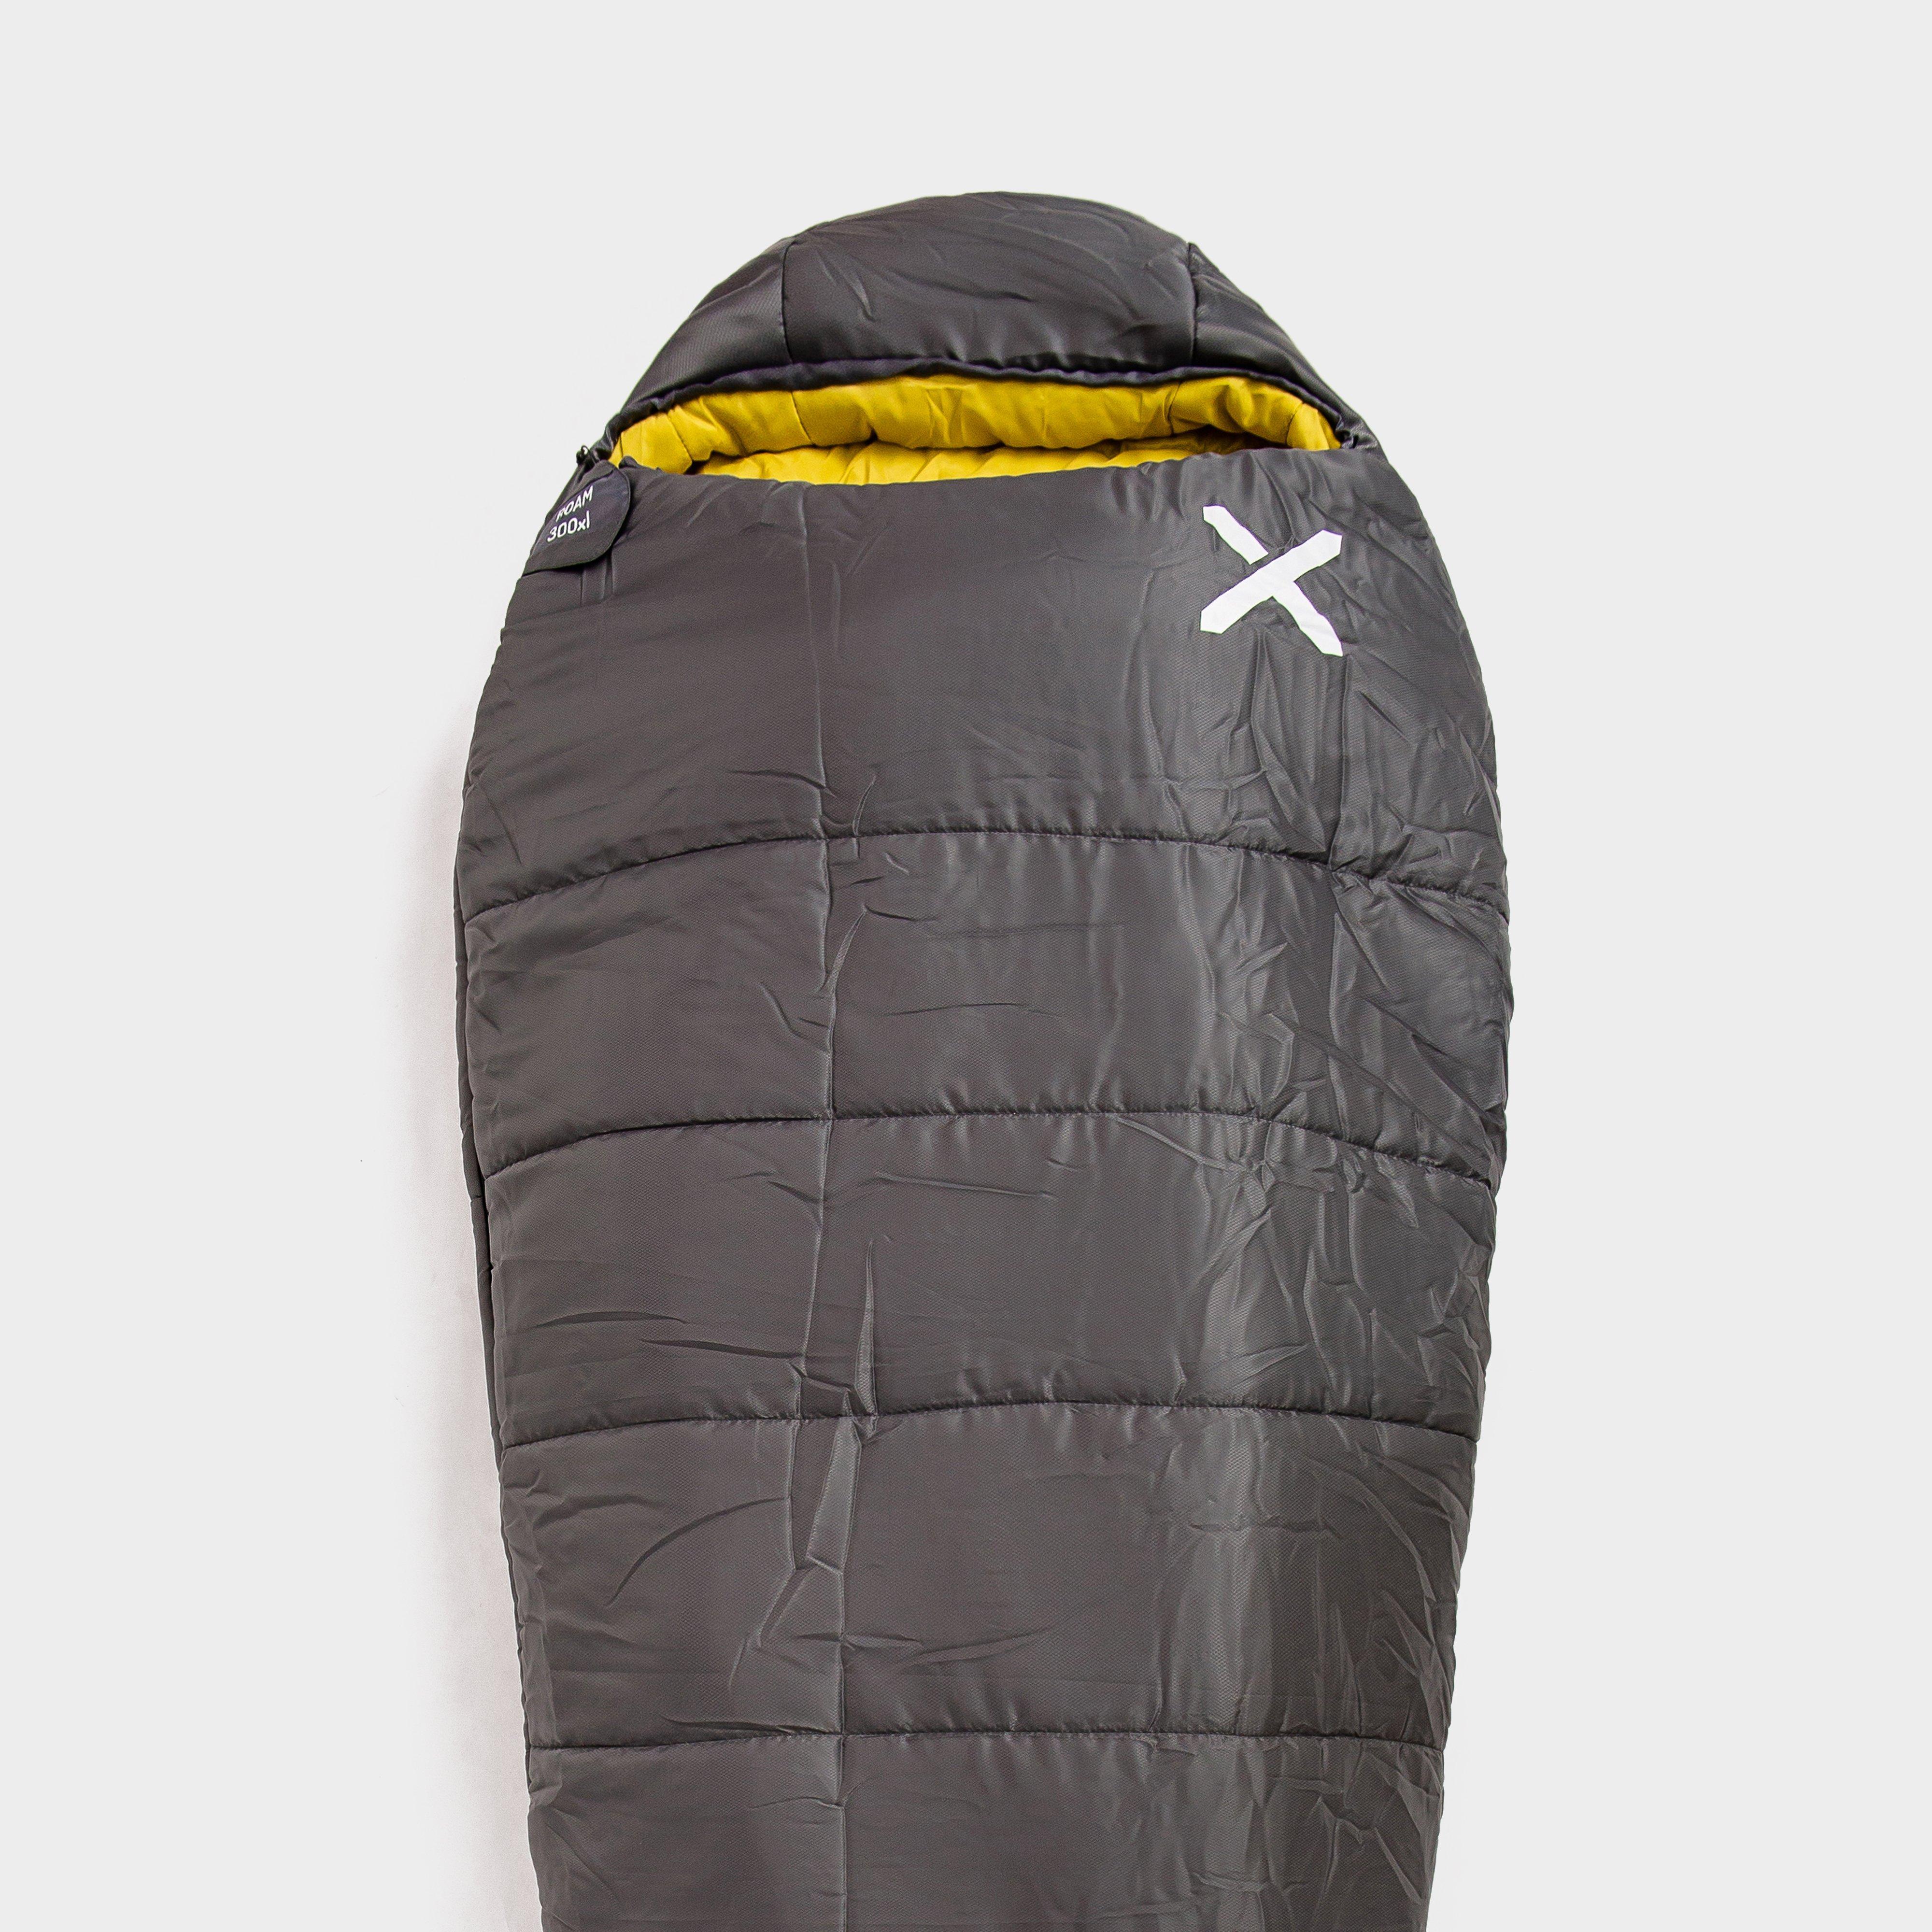  OEX Roam 300 XL Sleeping Bag, Grey